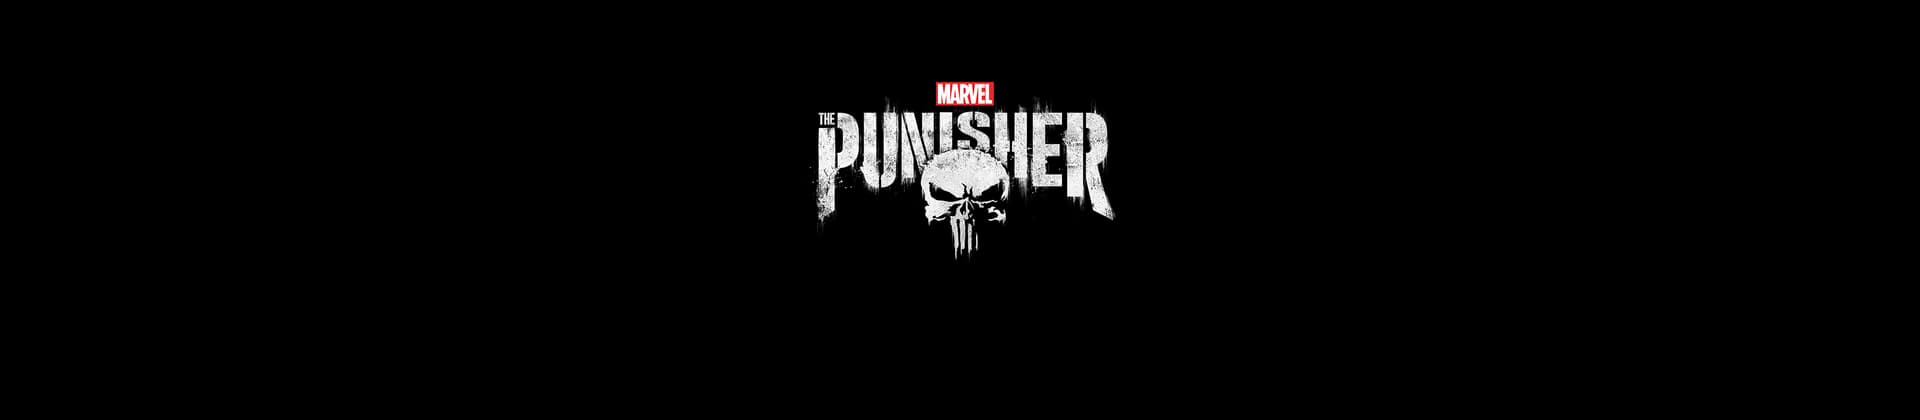 The Punisher TV Show Logo On Black